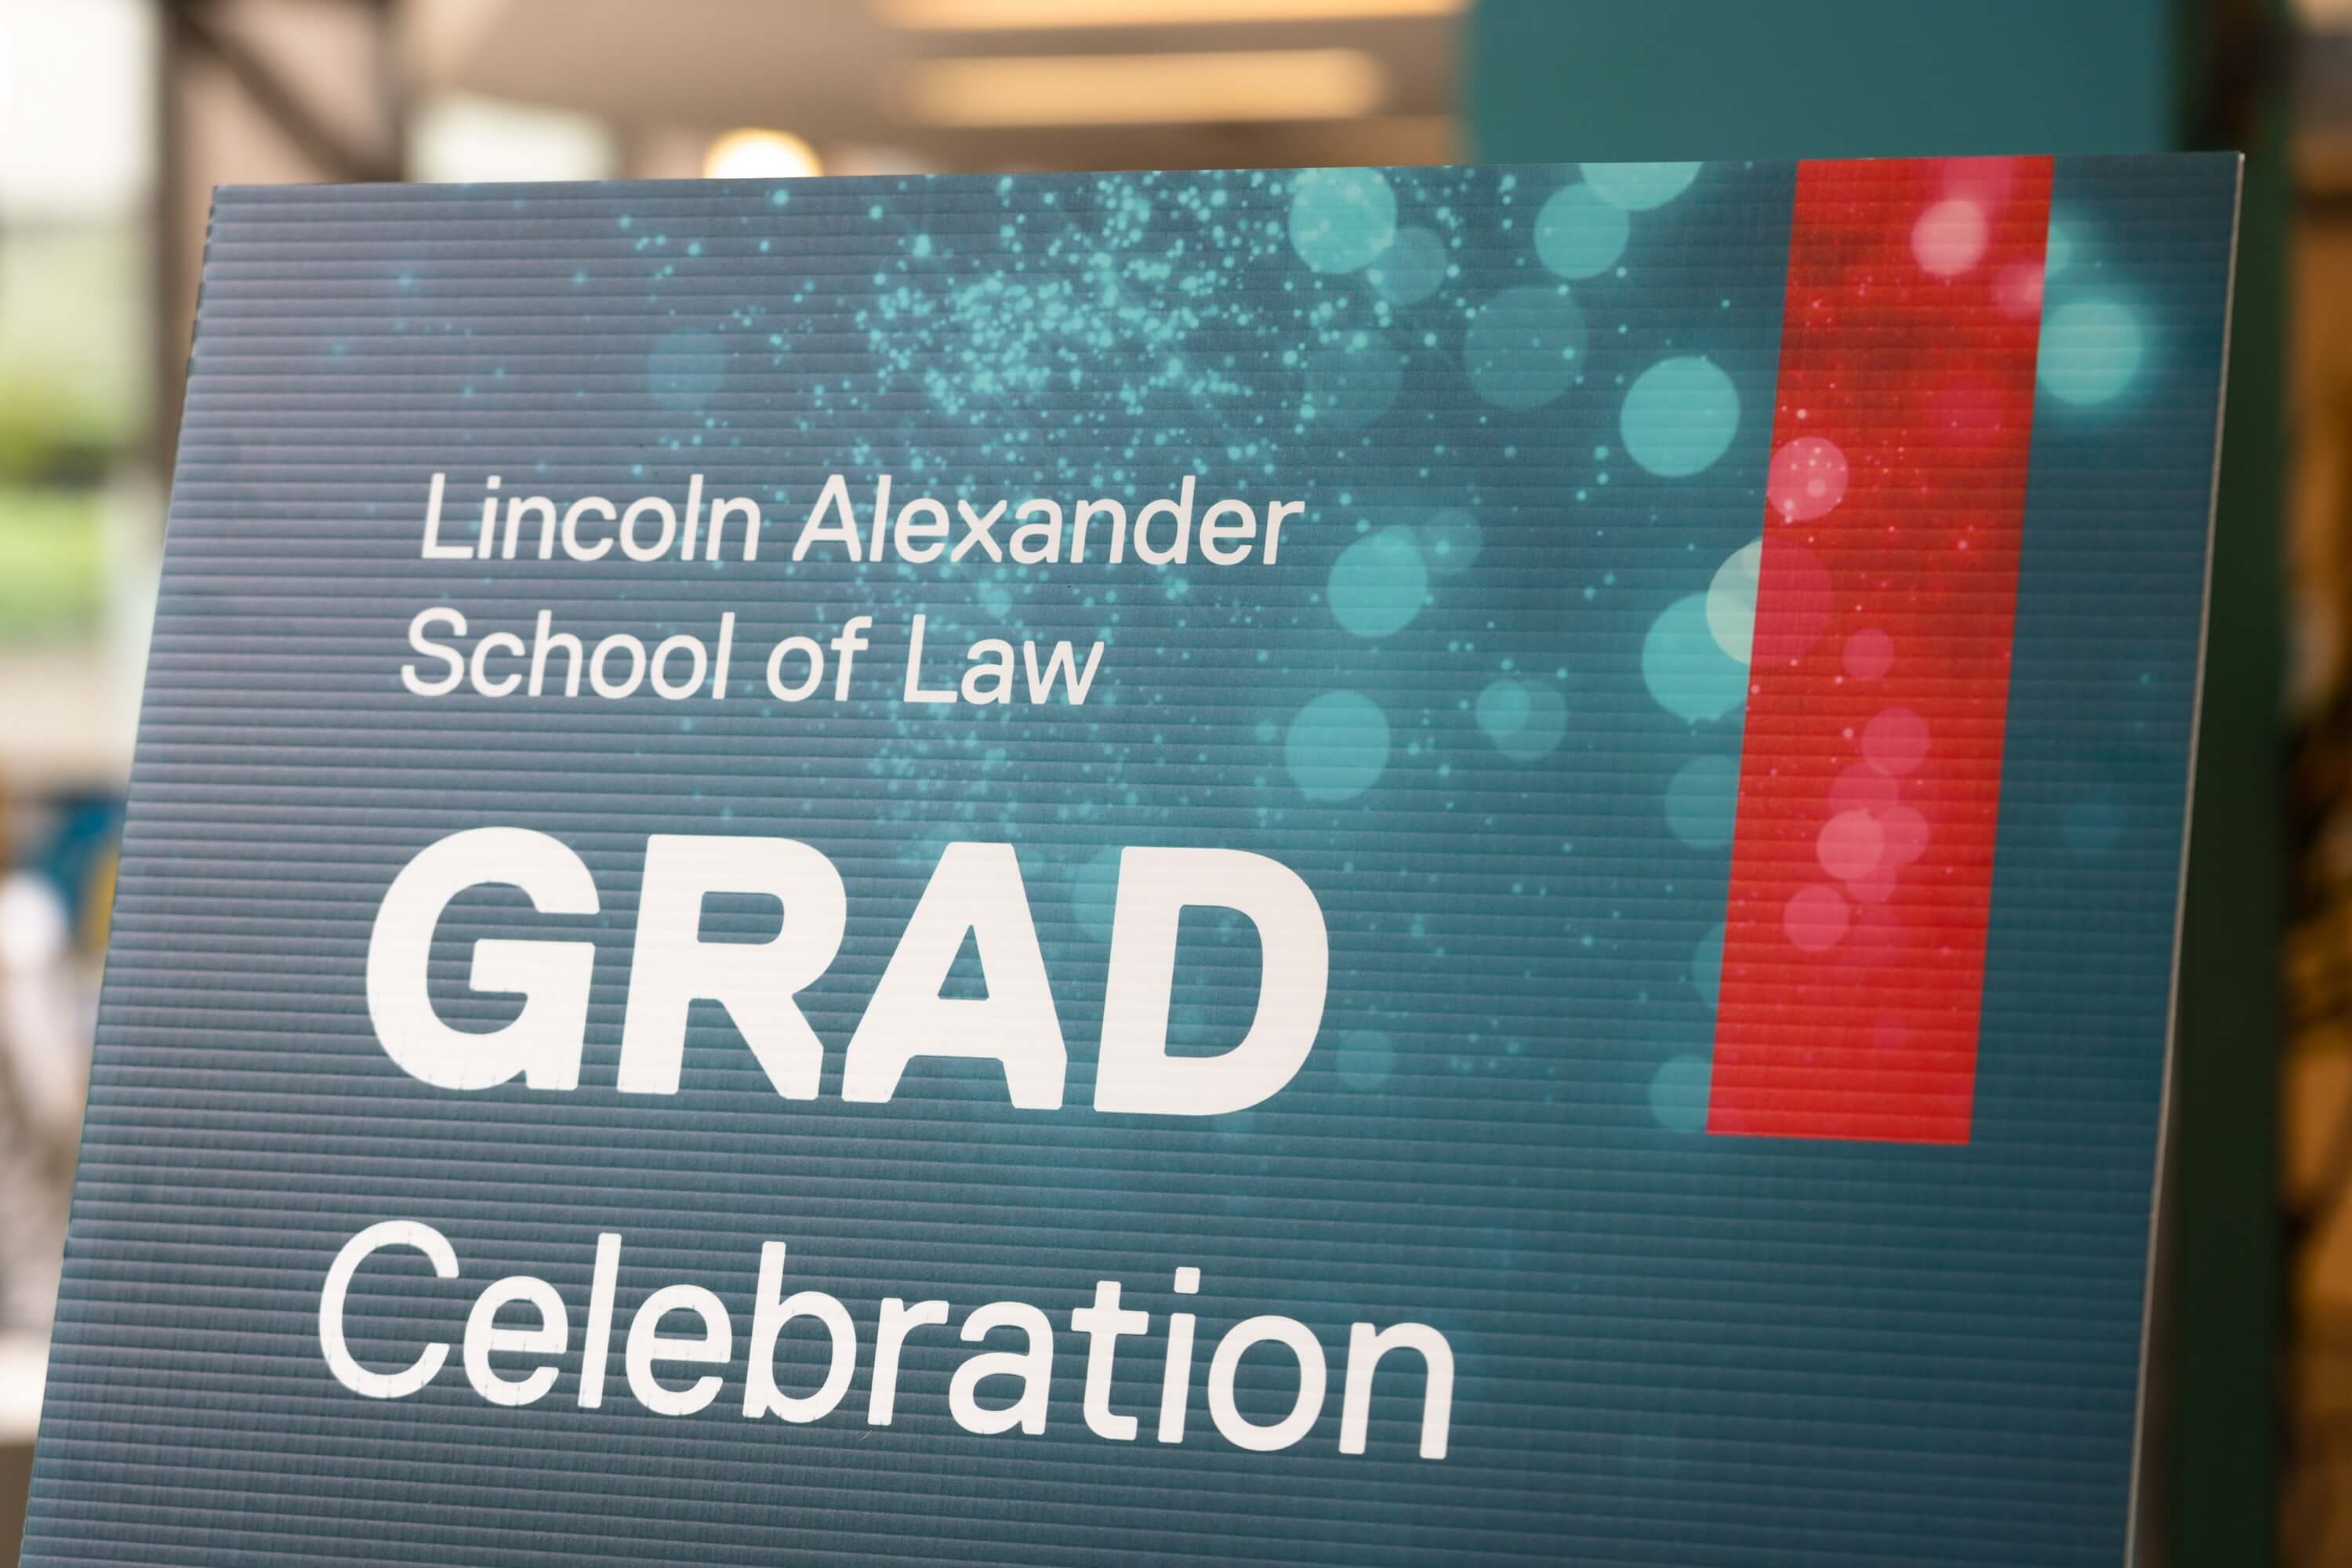 Lincoln Alexander School of Law Grad Celebration sign.